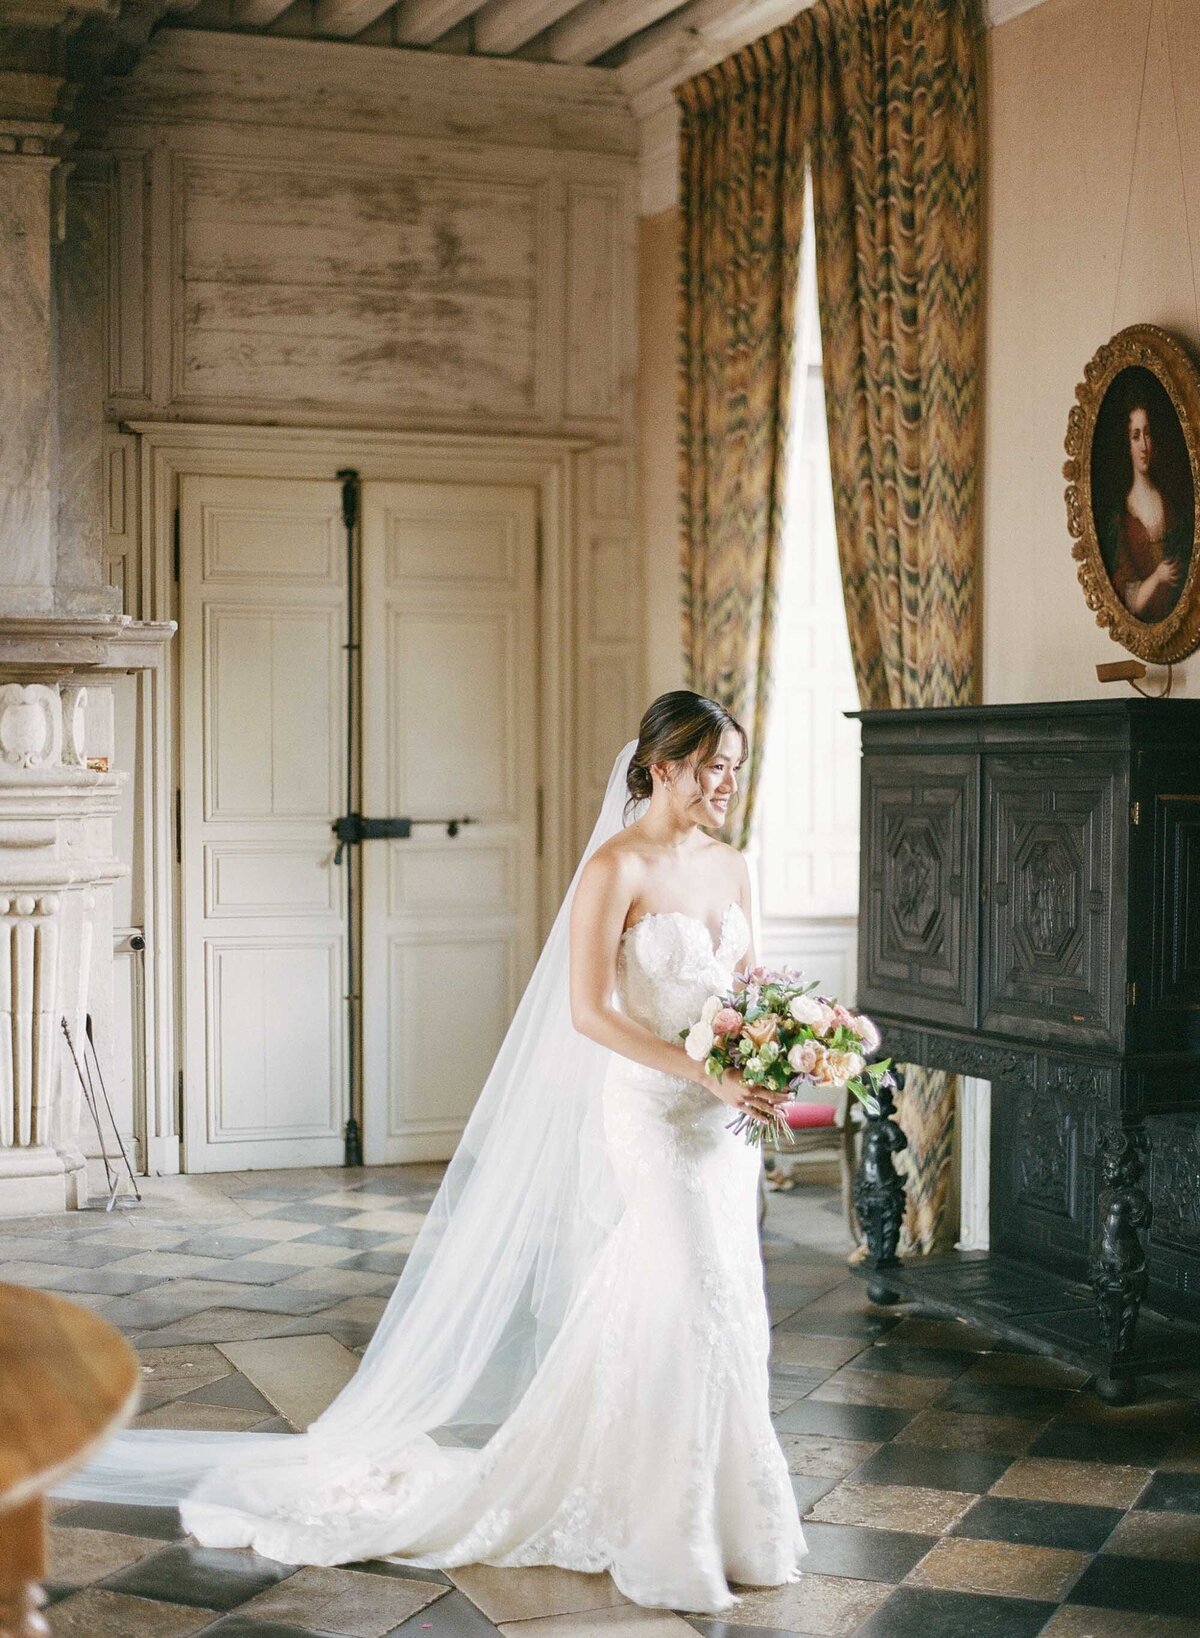 Molly-Carr-Photography-Paris-Wedding-Photographer-France-Destination-Film-Photography-28